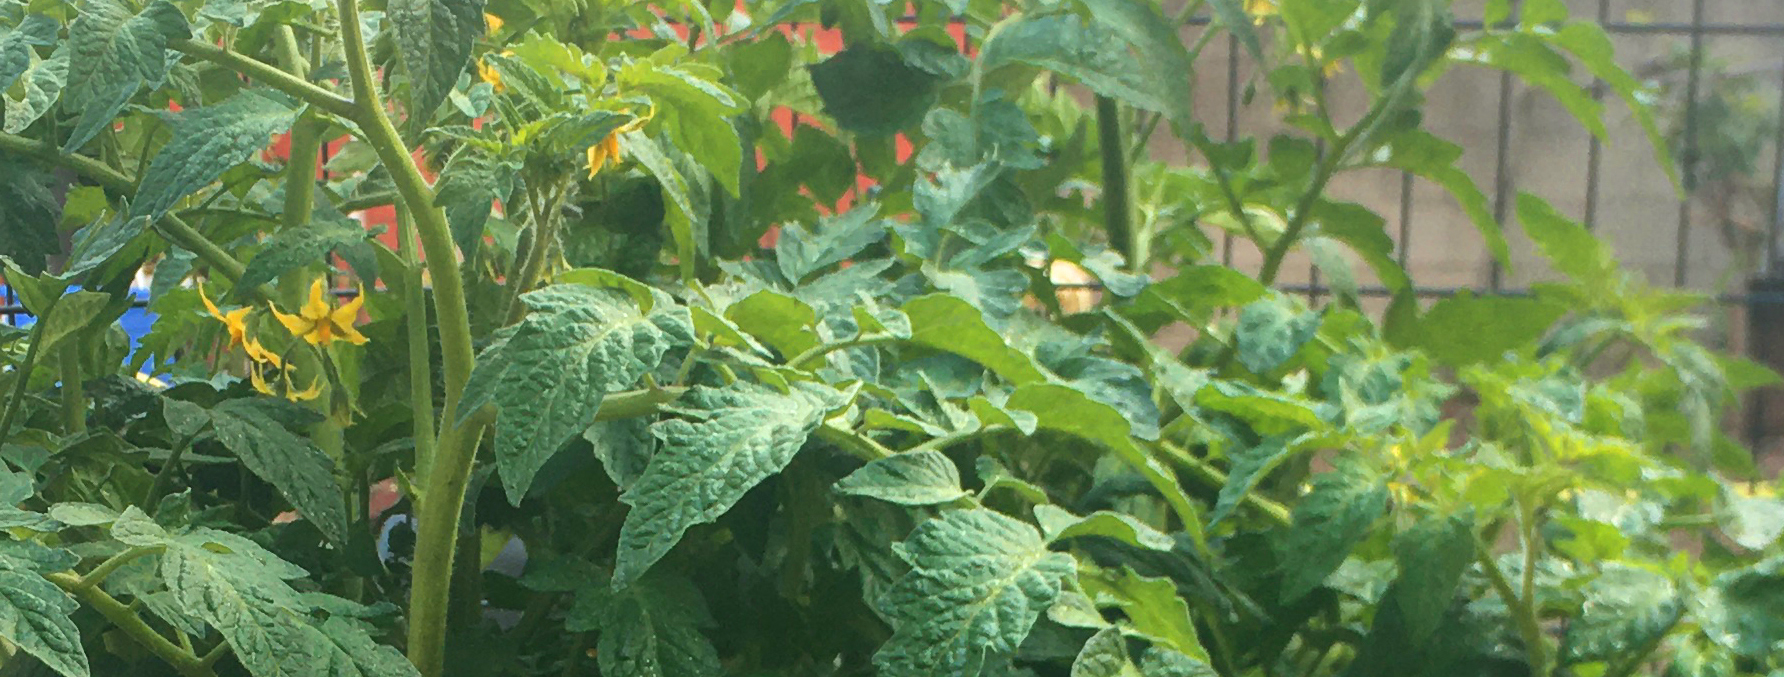 Green Tomato Plants - fertilizer